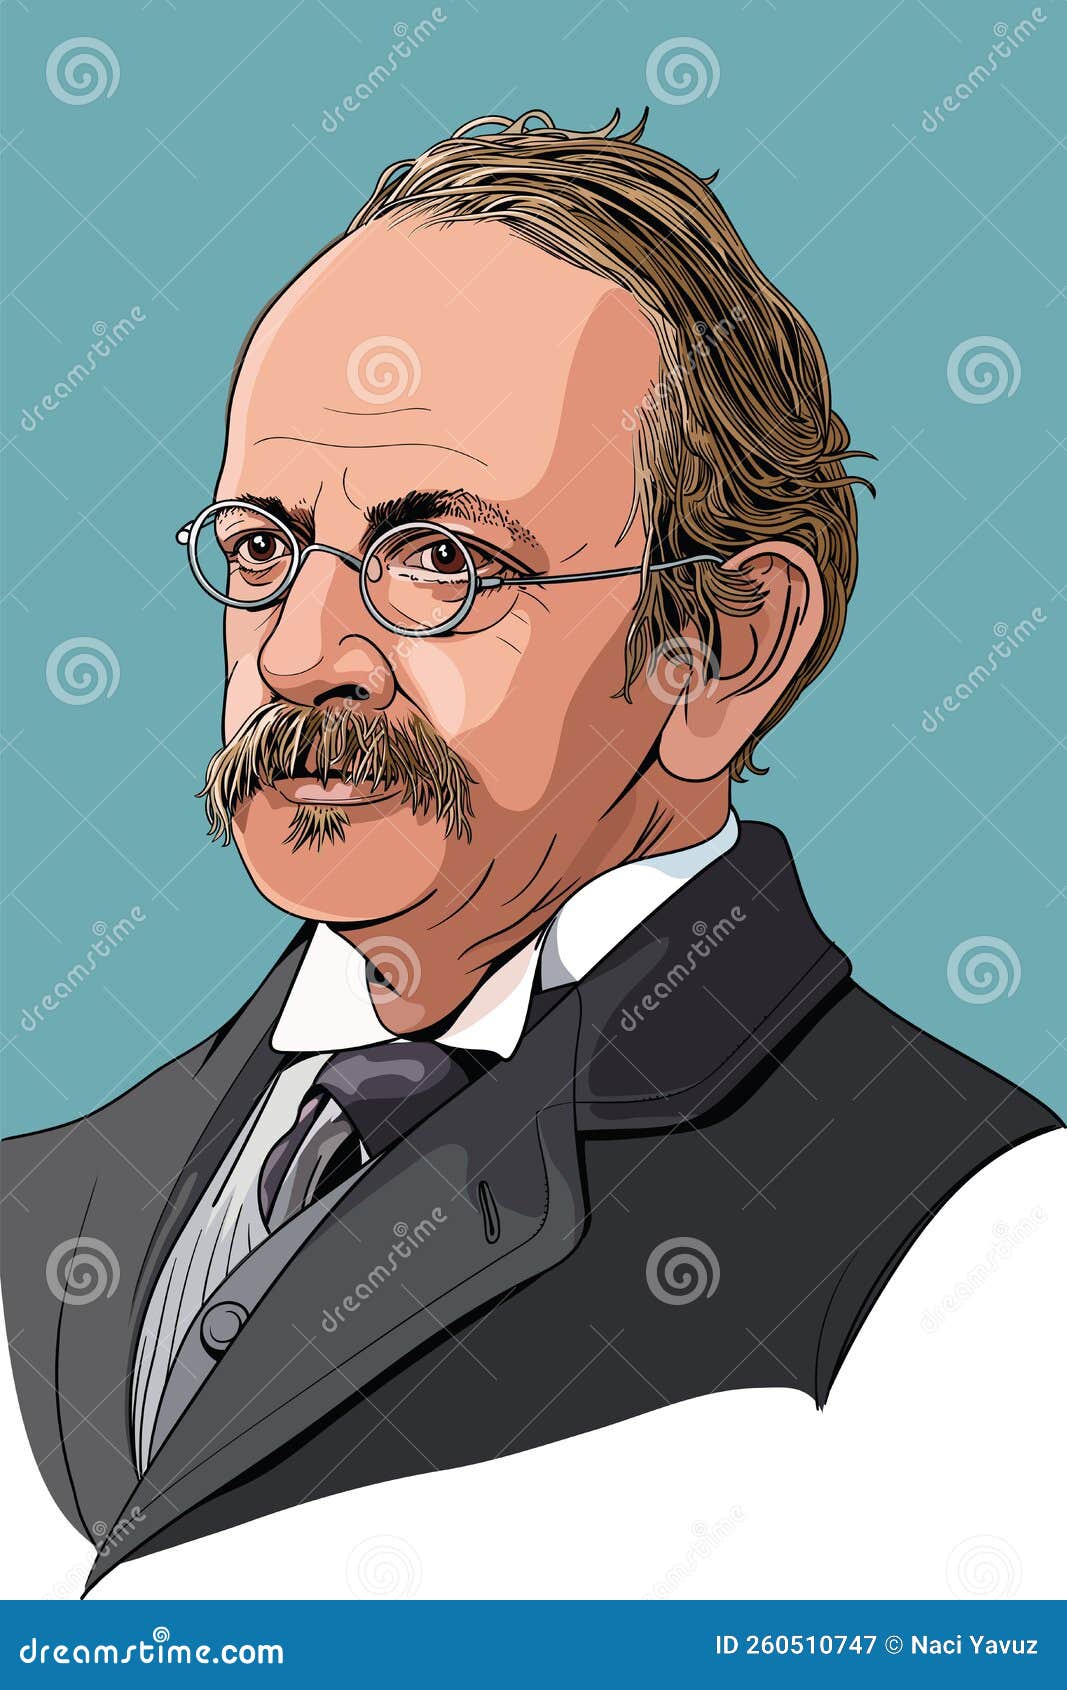 sir j. j. thomson cartoon style portrait